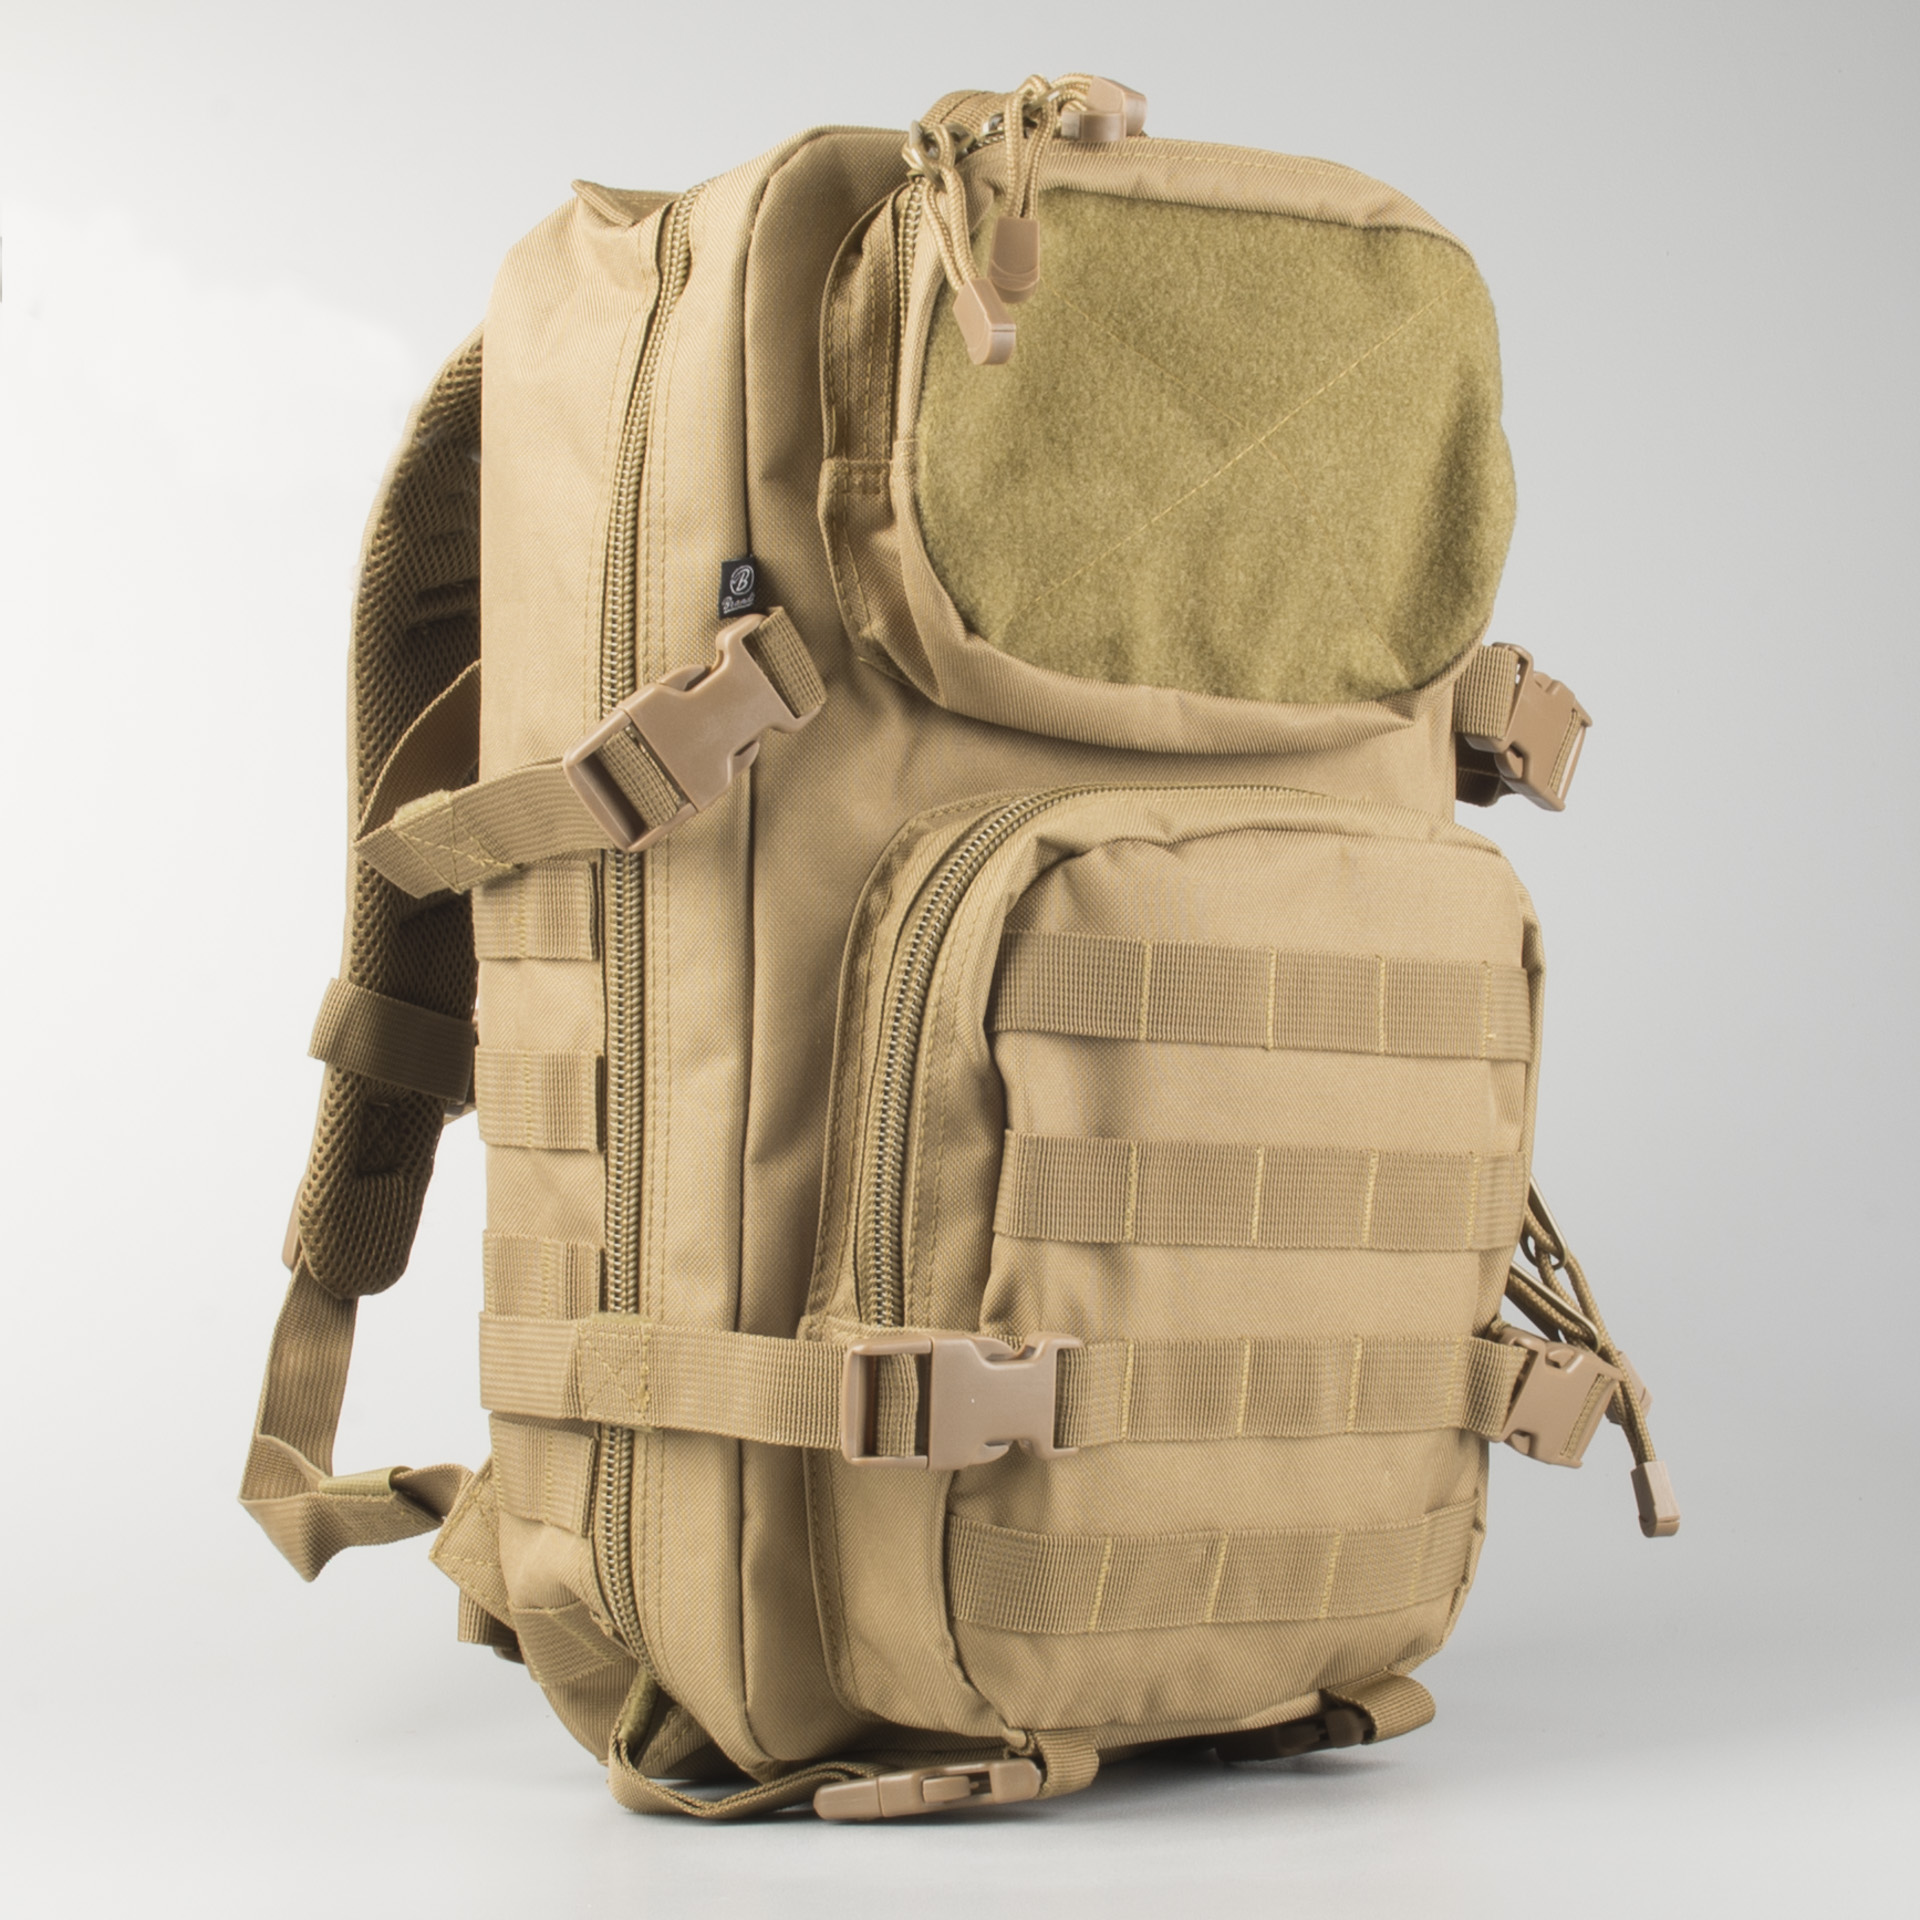 Brandit US Cooper Backpack - Camel 25L - Now 37% Savings | 24MX